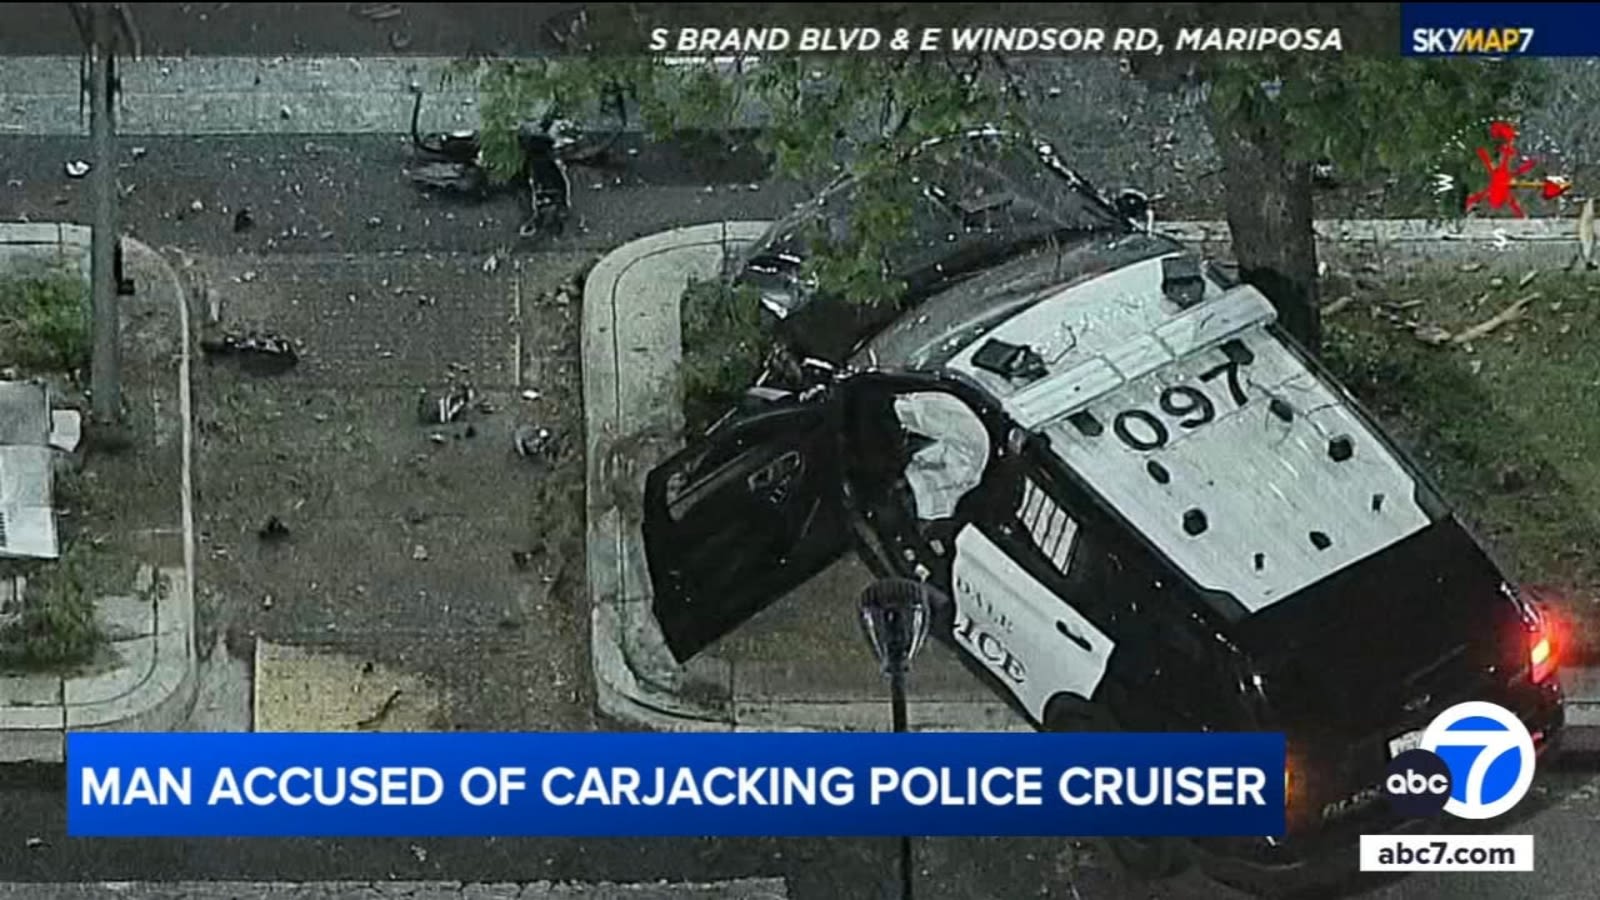 Carjacking suspect arrested after crashing Glendale police cruiser, officials say